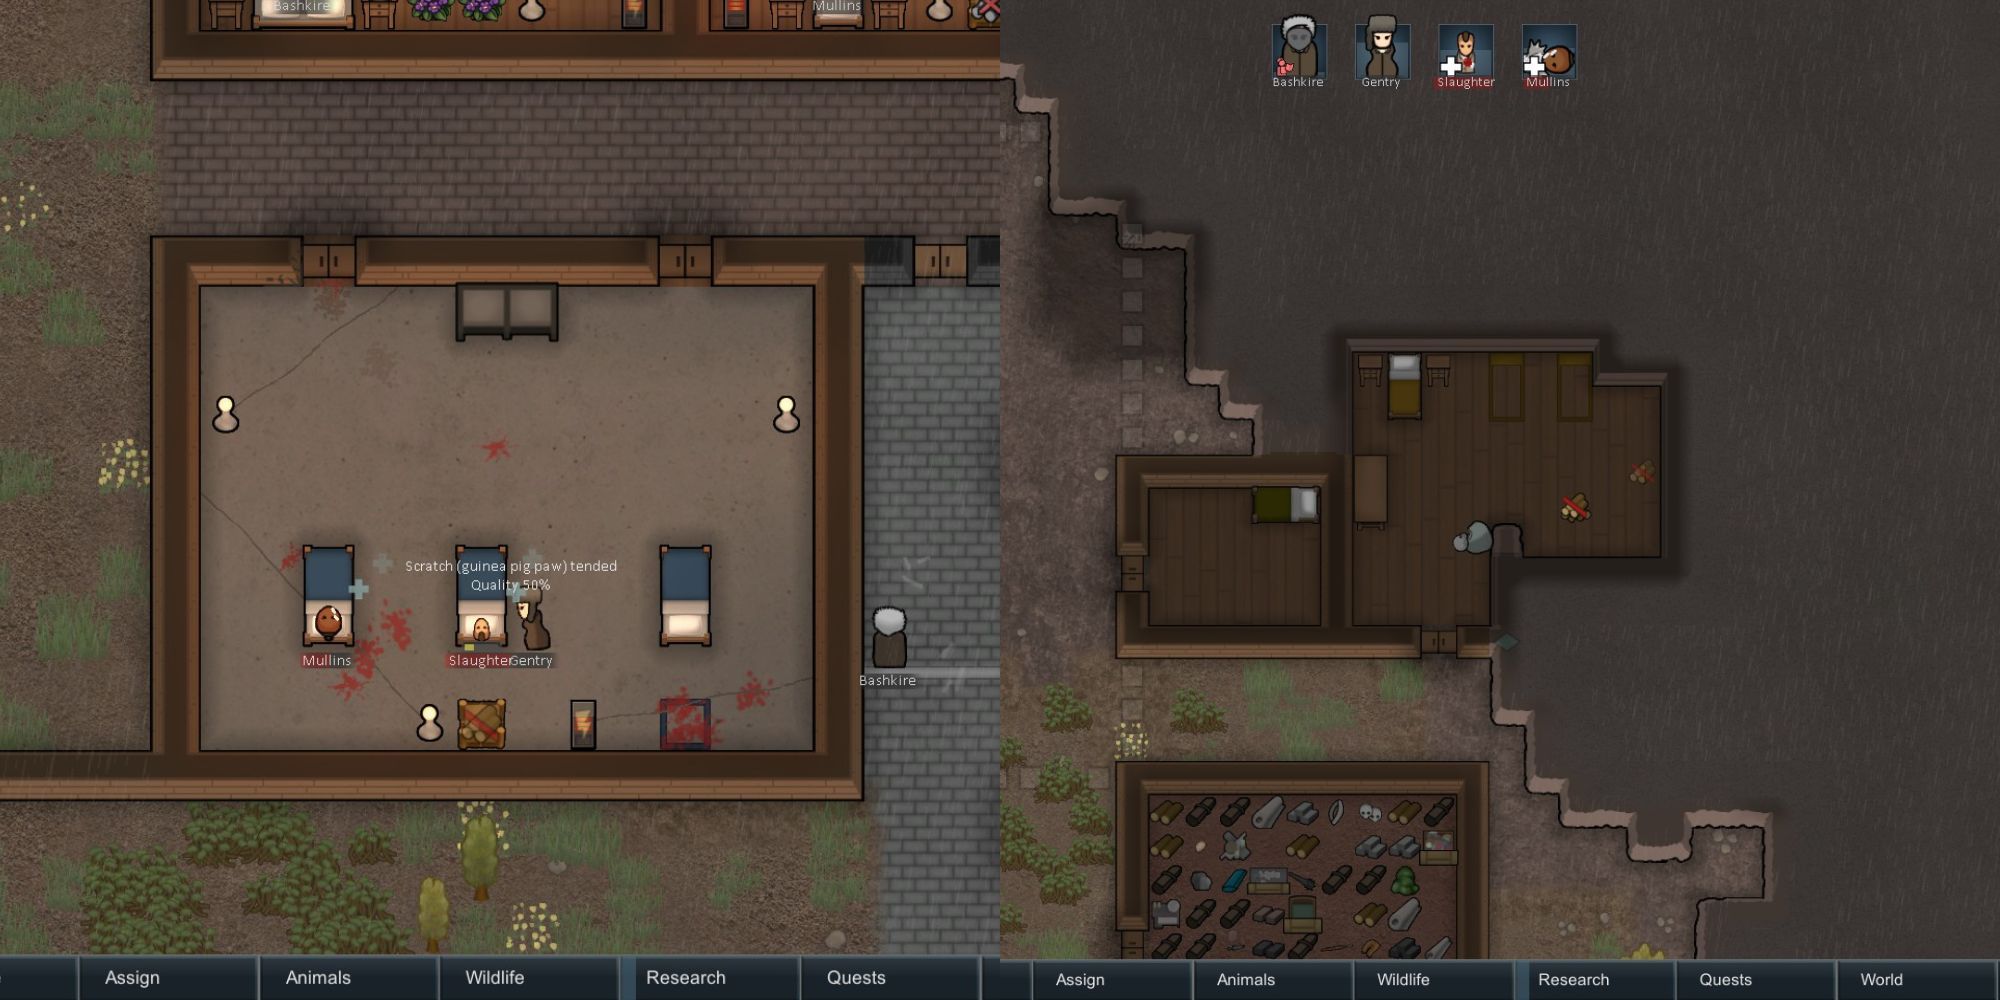 Prison and Hospital set up